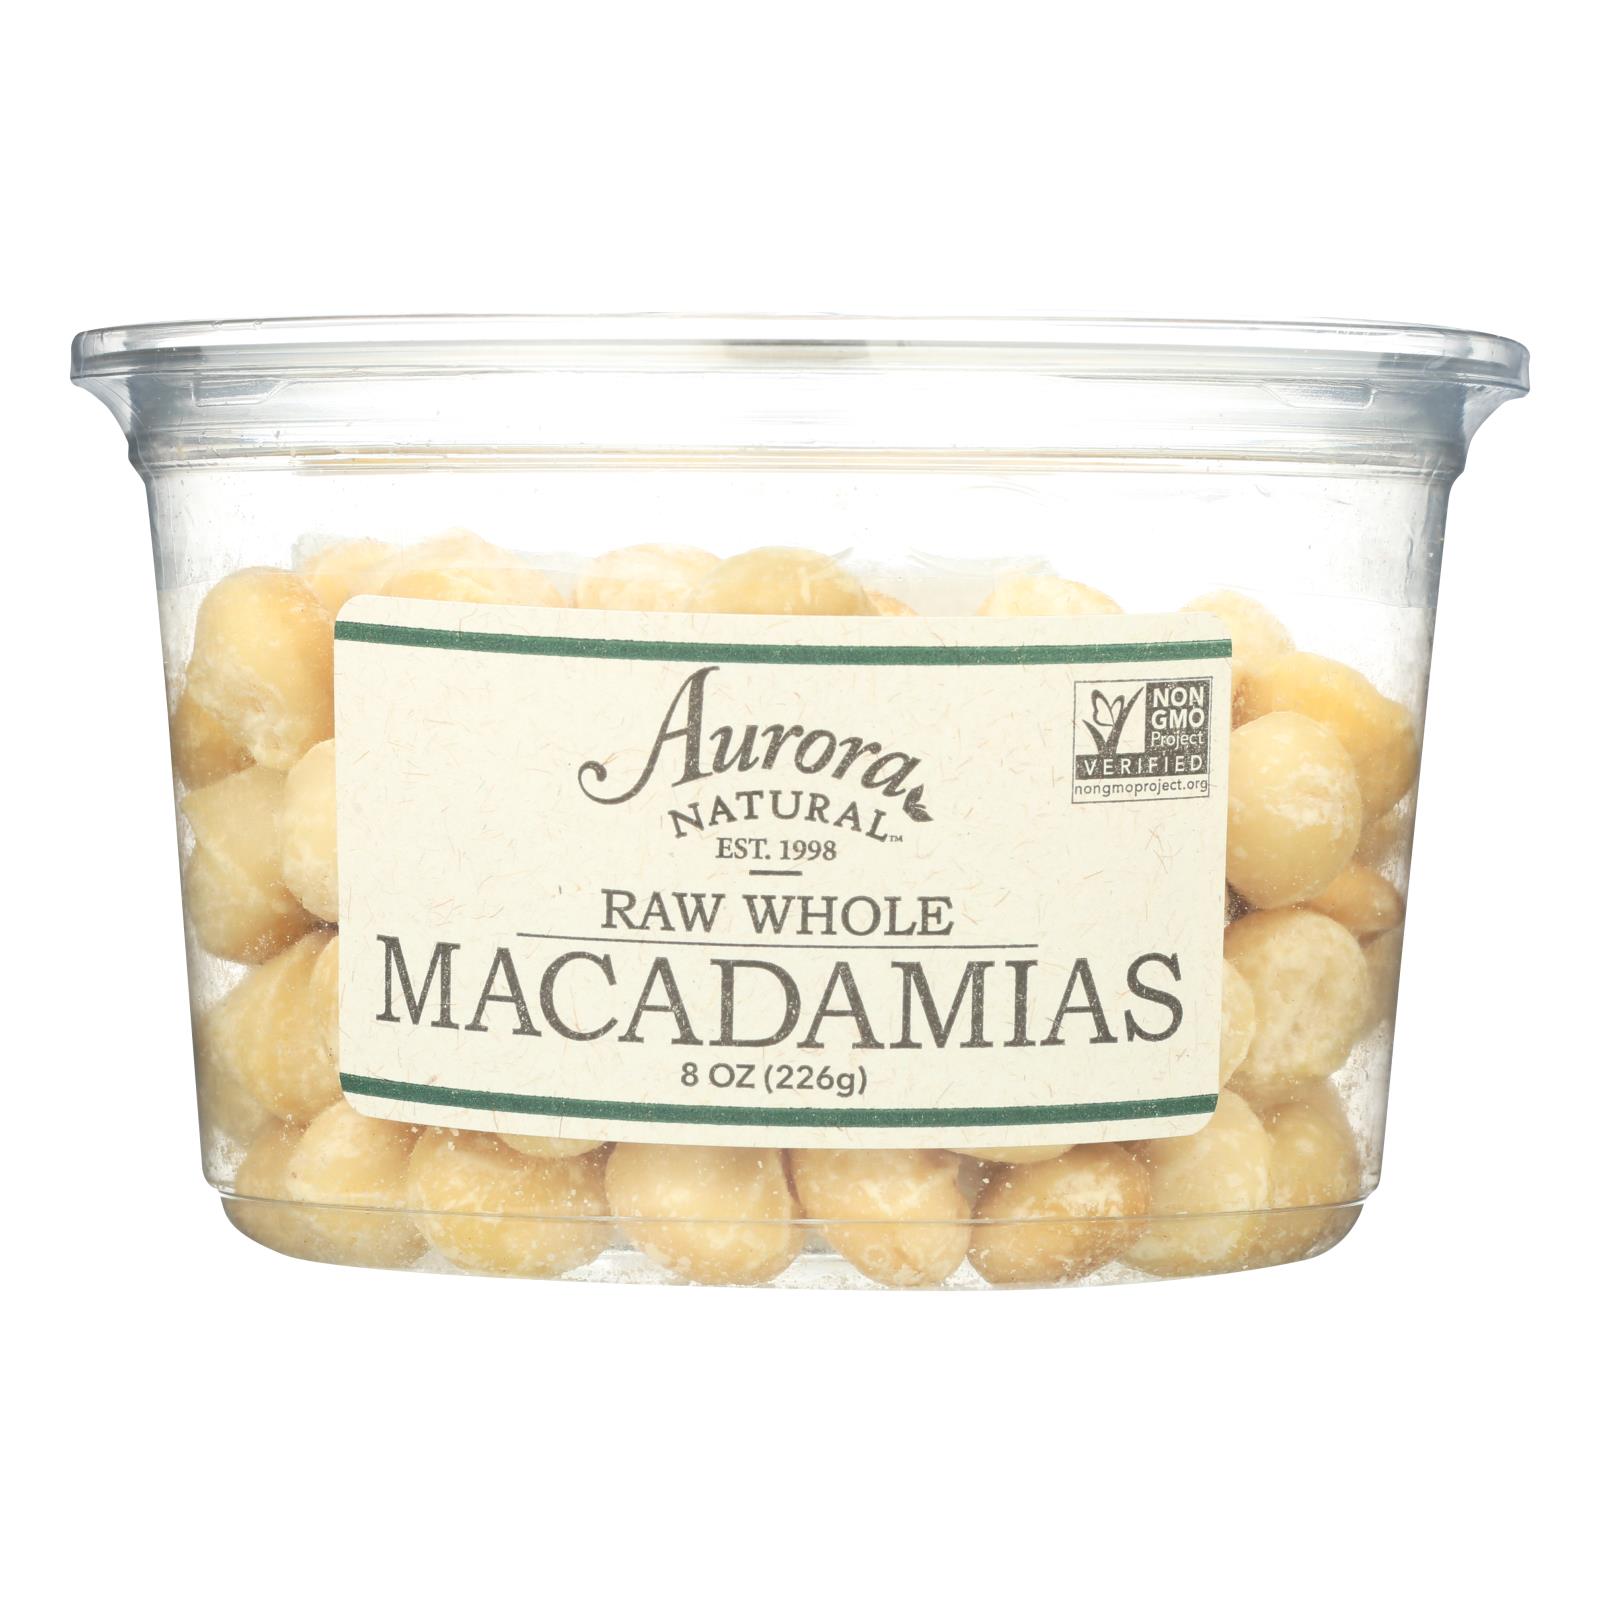 Aurora Natural Products - Raw Whole Macadamias - 12개 묶음상품 - 8 oz.